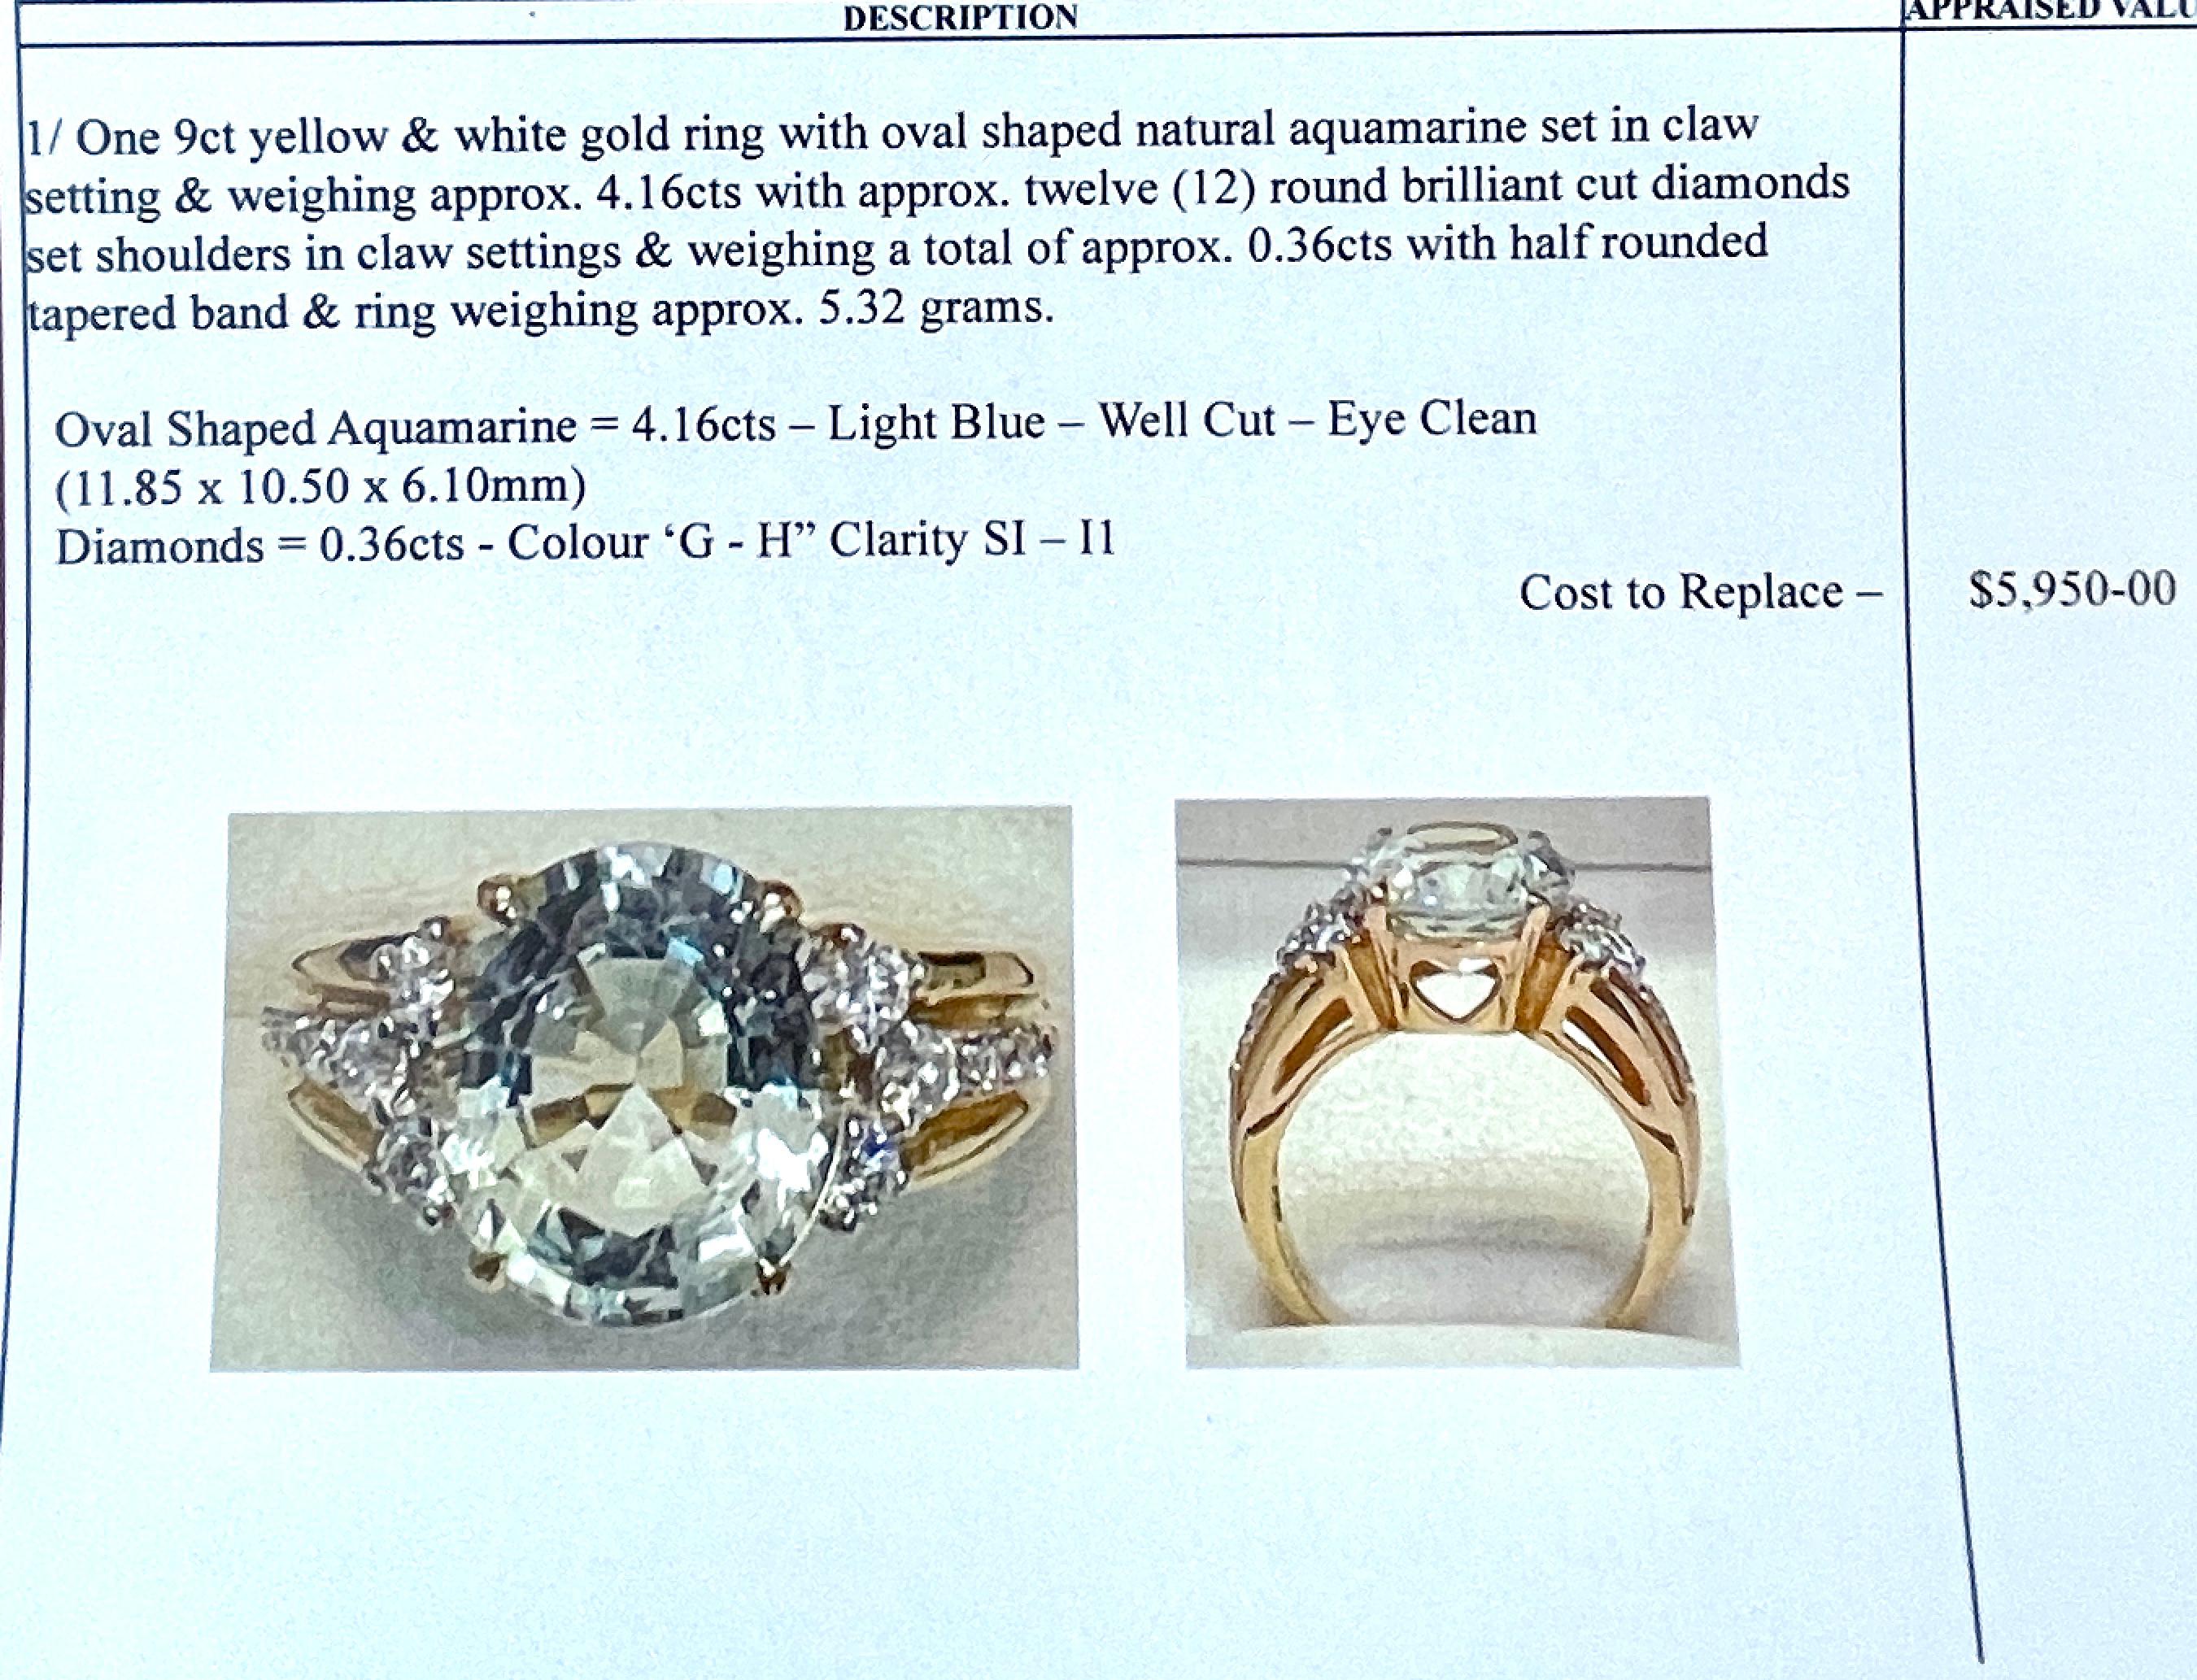 Women's Large Oval Cut Light Blue Natural Aquamarine Diamond Ring Valuation Bargain For Sale